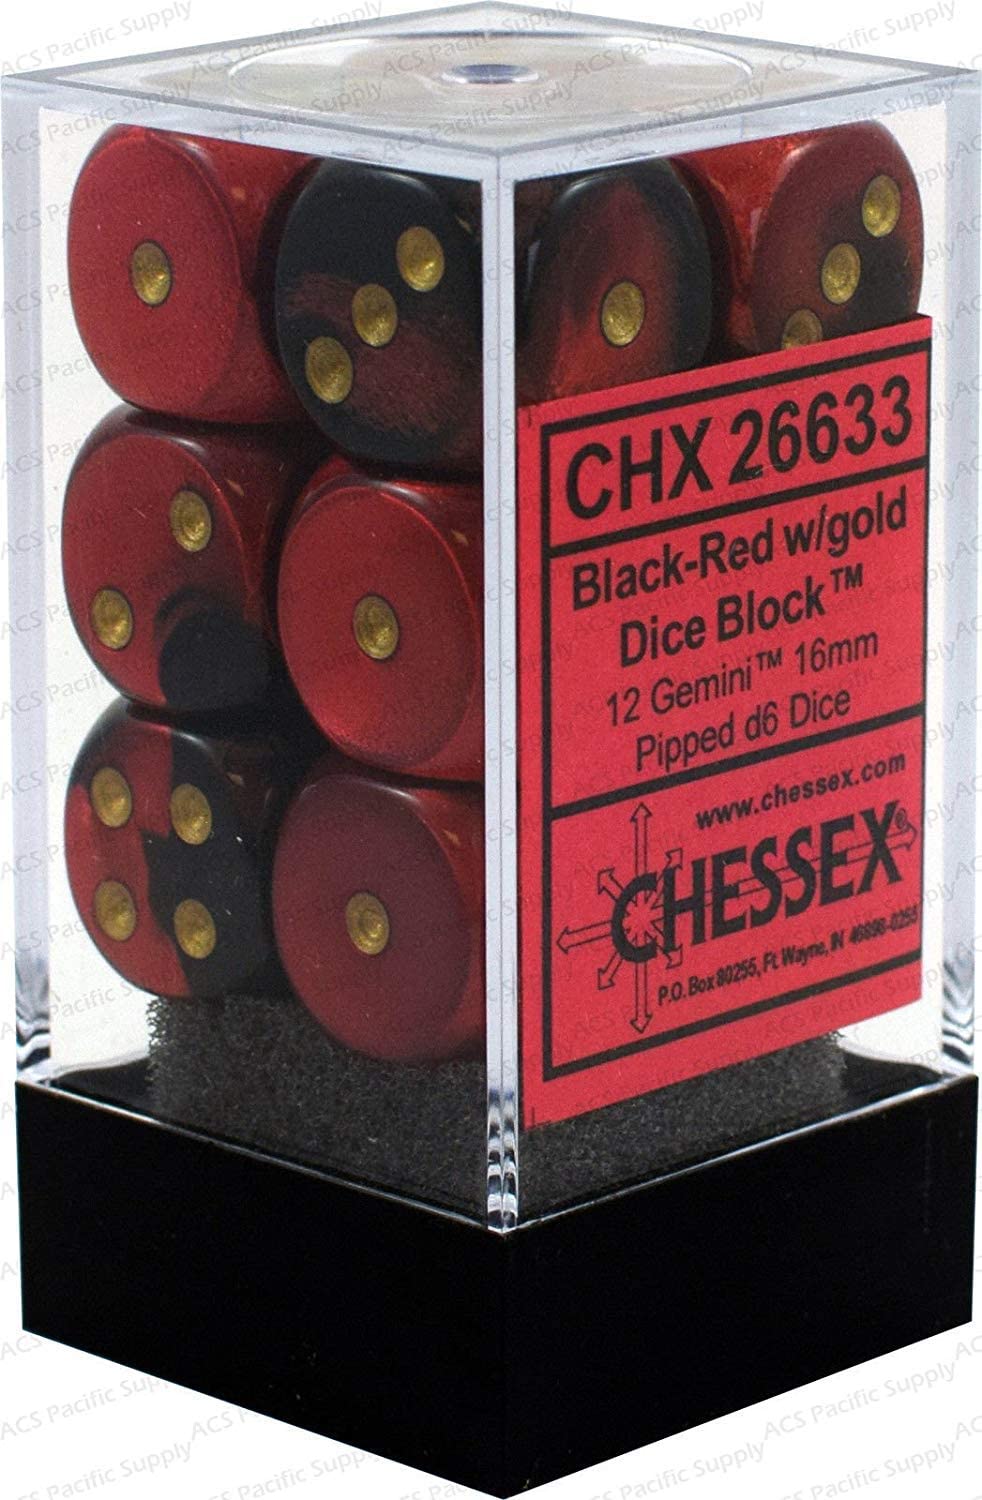 Chessex Dice: D6 Block 16mm - Gemini - Black-Red with Gold (CHX 26633) - Gamescape